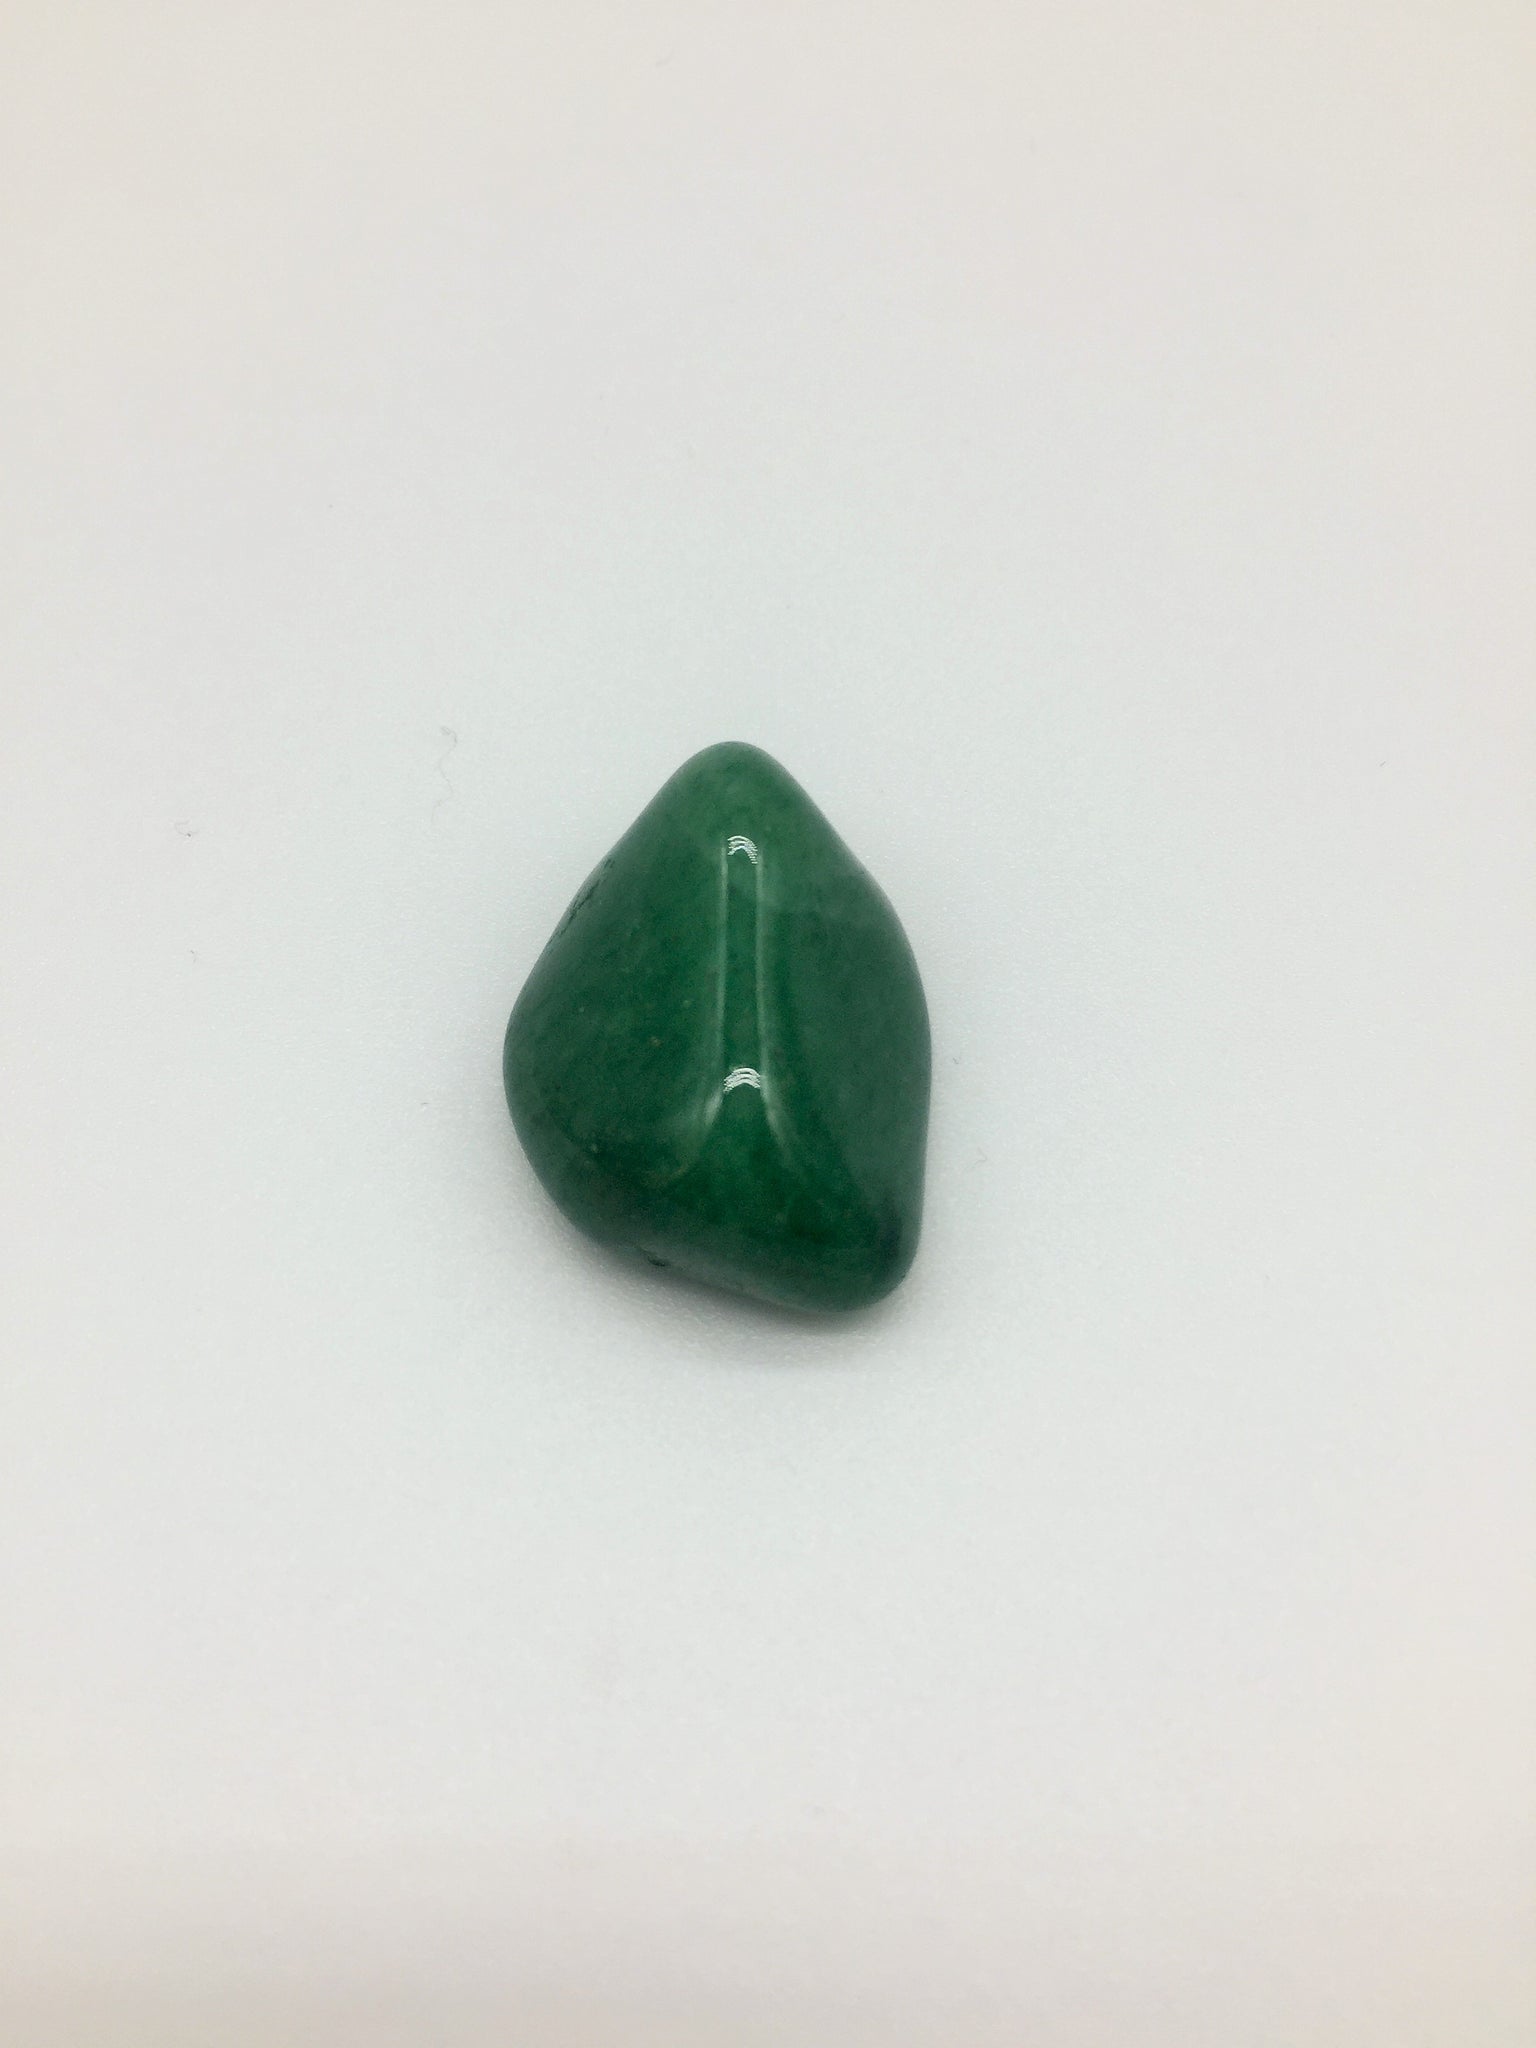 Green Quartz Holistic Healing stone promotes Physical & Emotional wellness